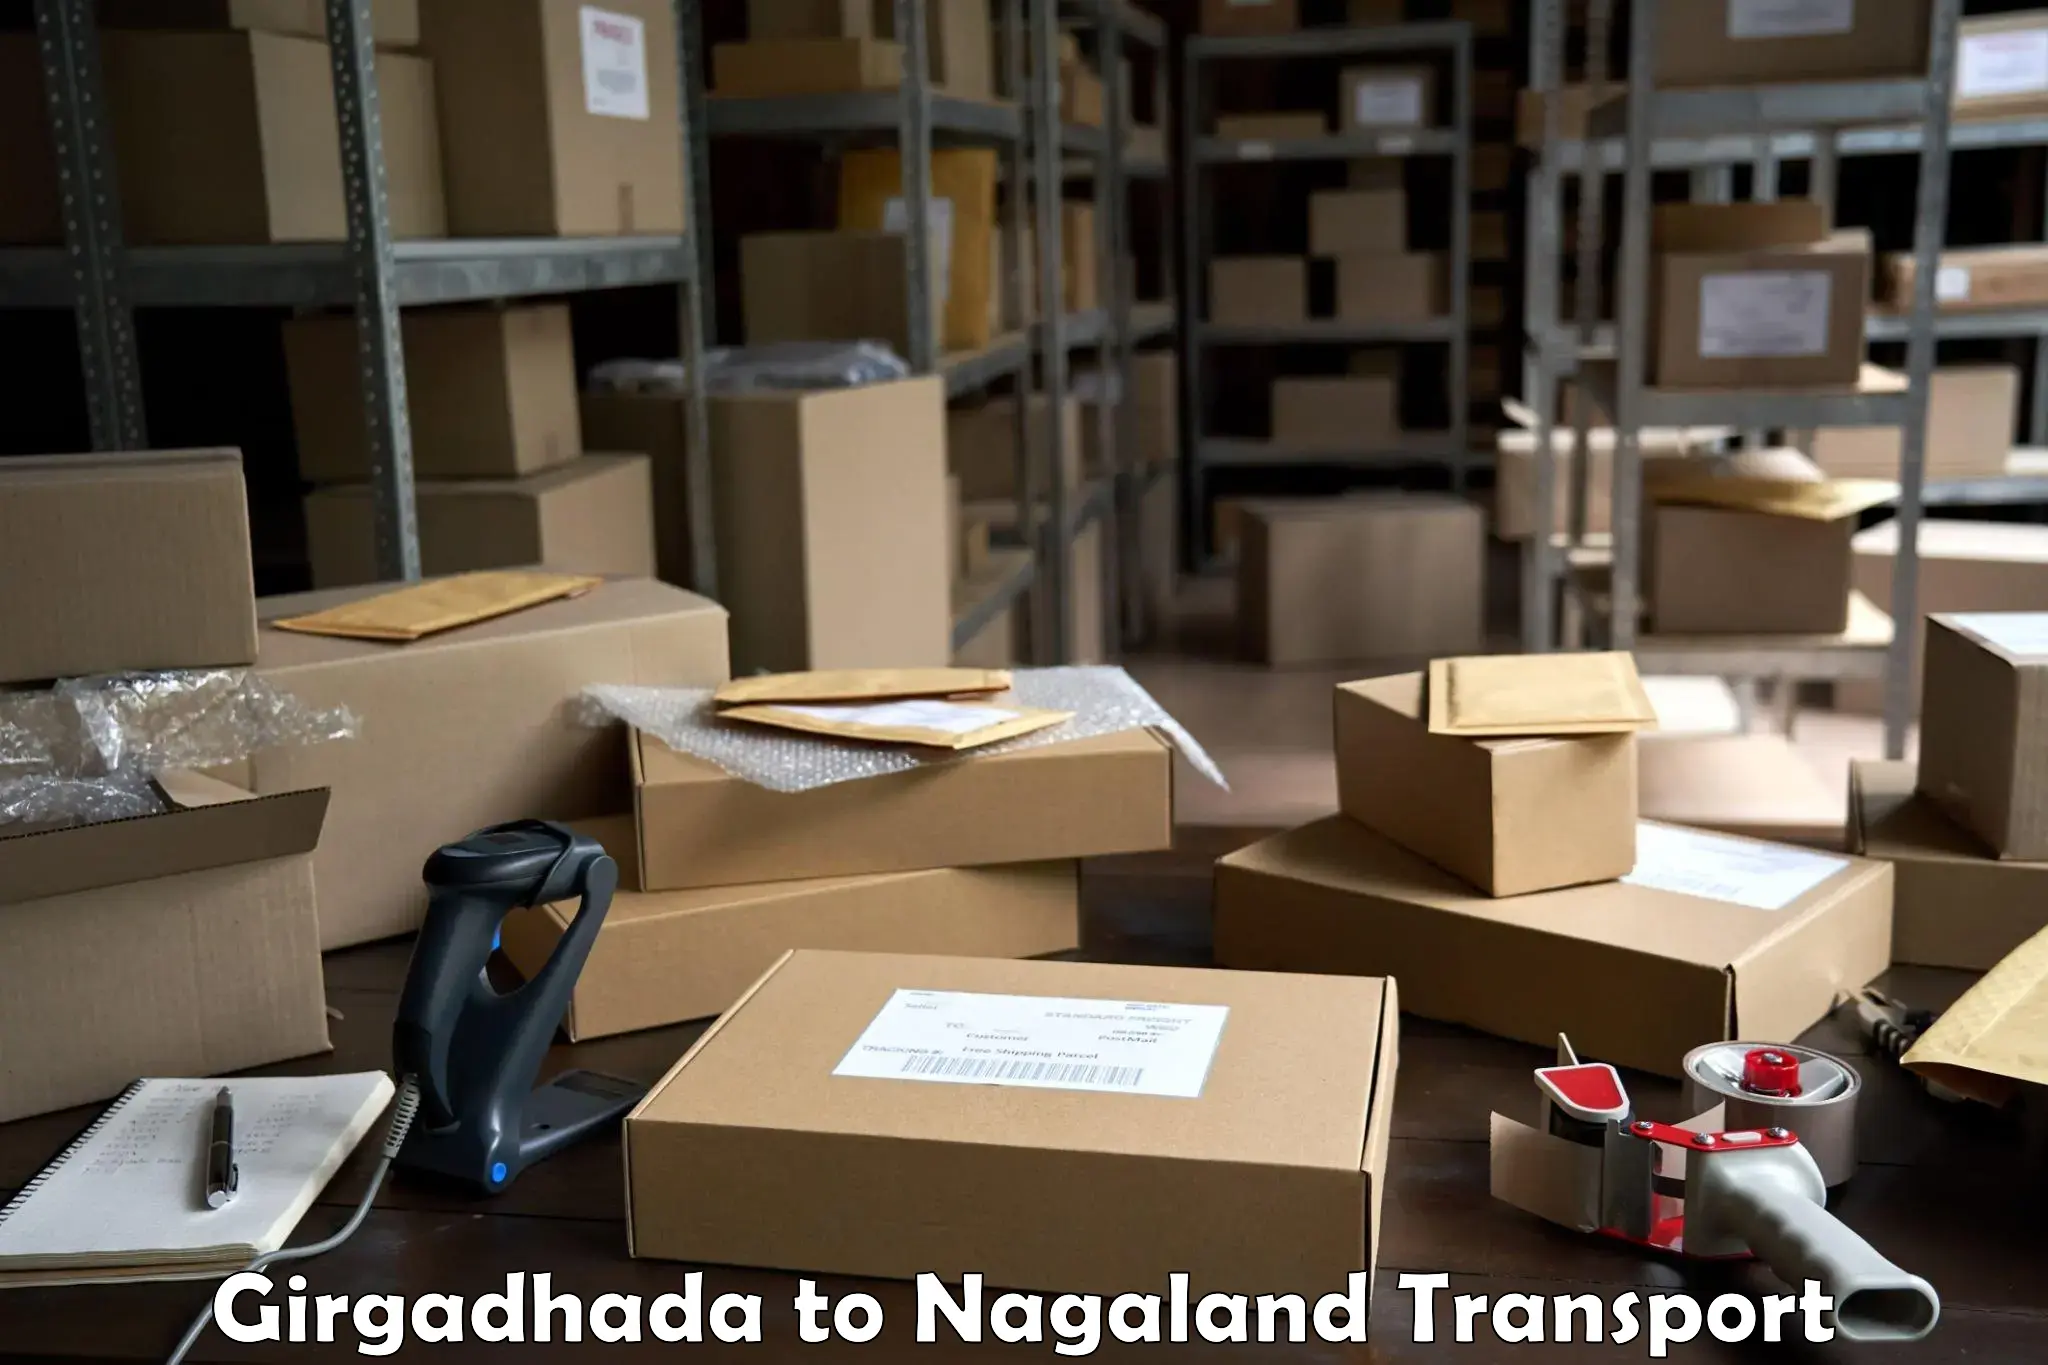 Vehicle transport services Girgadhada to Nagaland